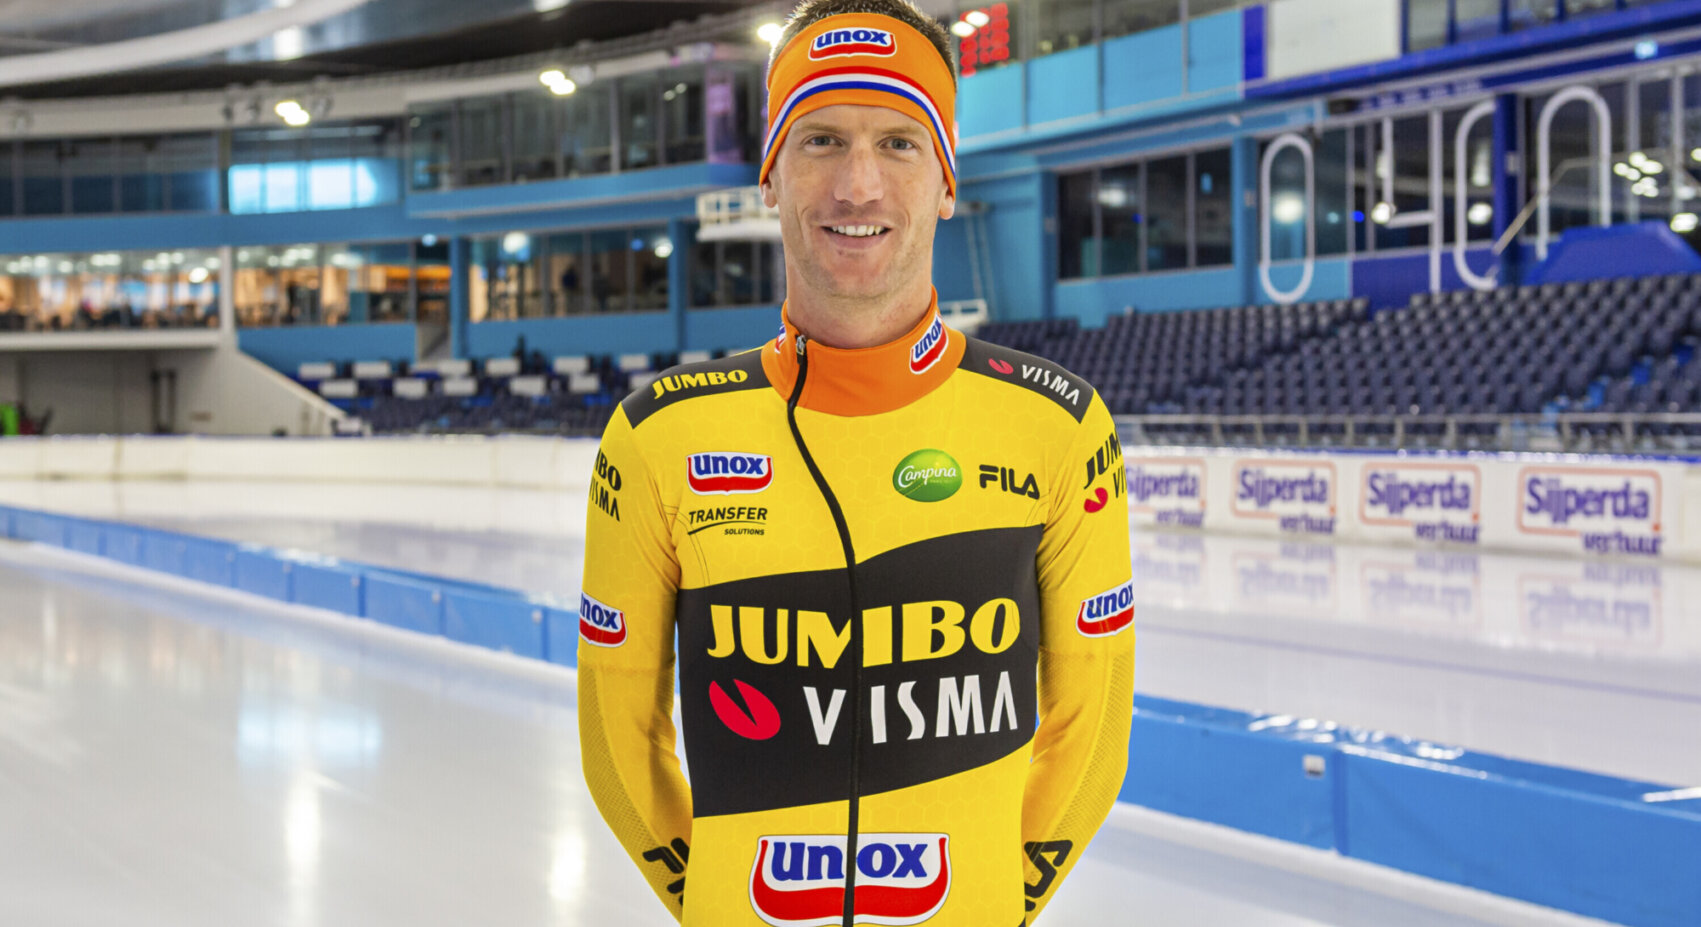 Marathon speed skater Kooiman (34) to retire after this season	